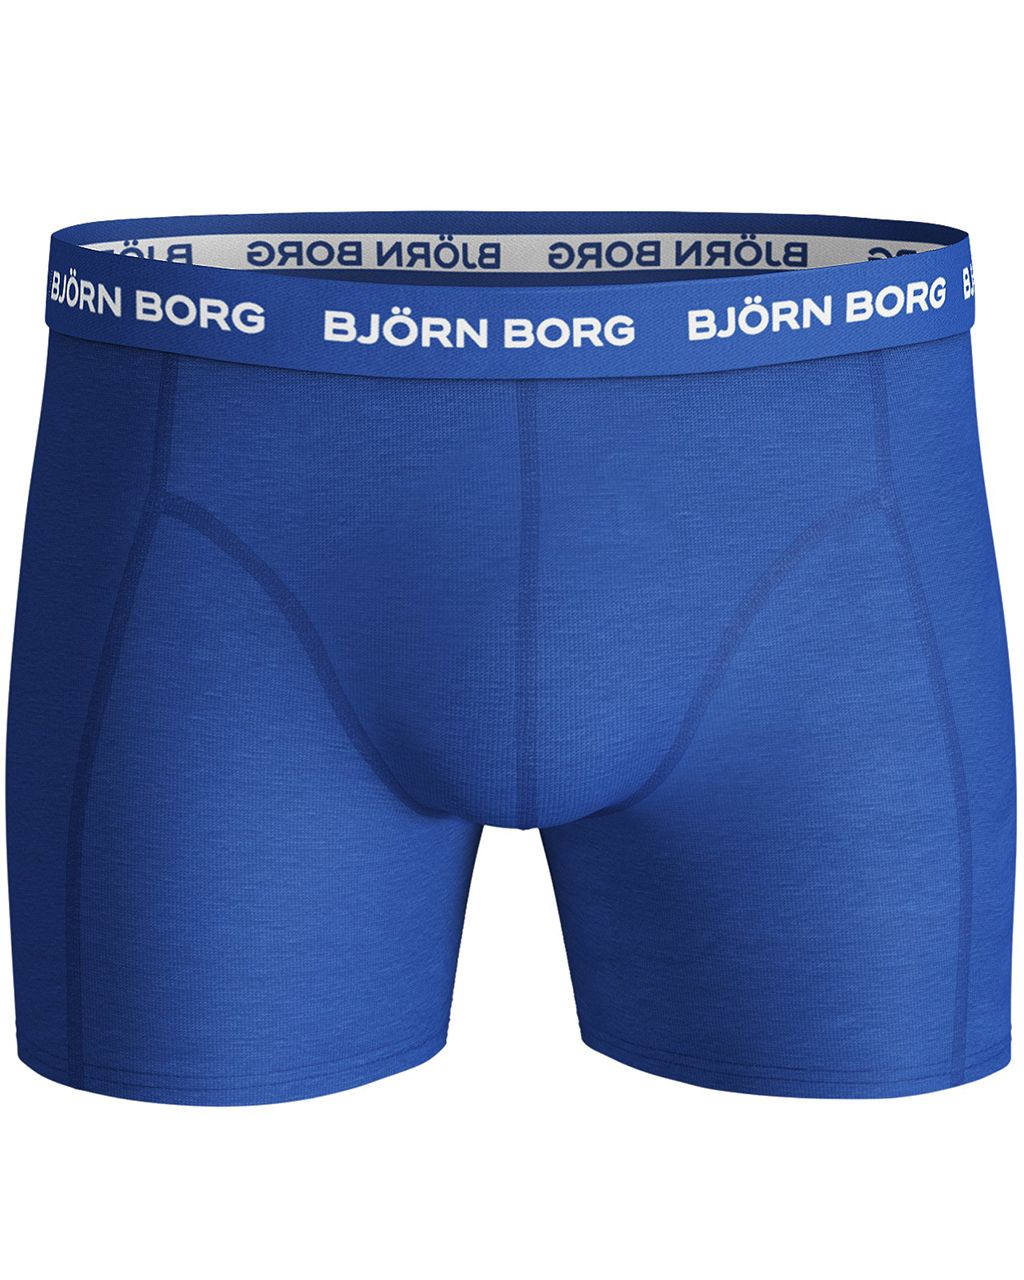 Björn Borg Boxershort 3-pack Blauw 051821-001-L